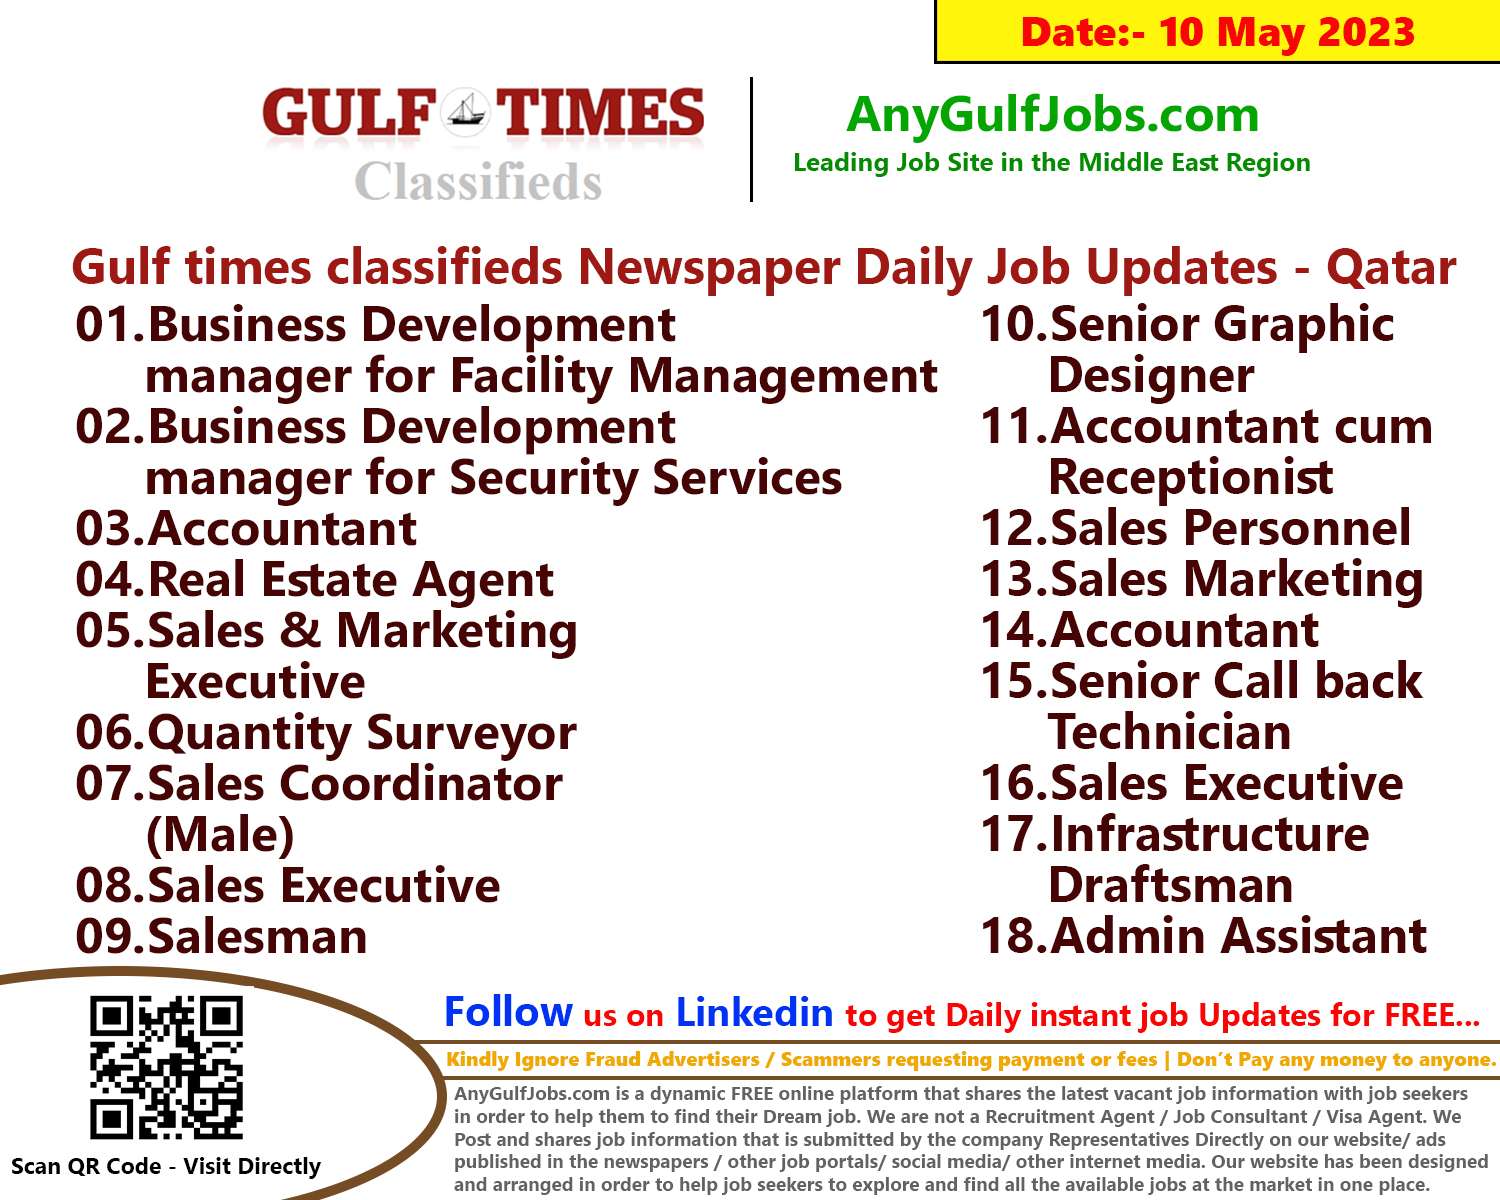 Gulf times classifieds Job Vacancies Qatar - 10 May 2023